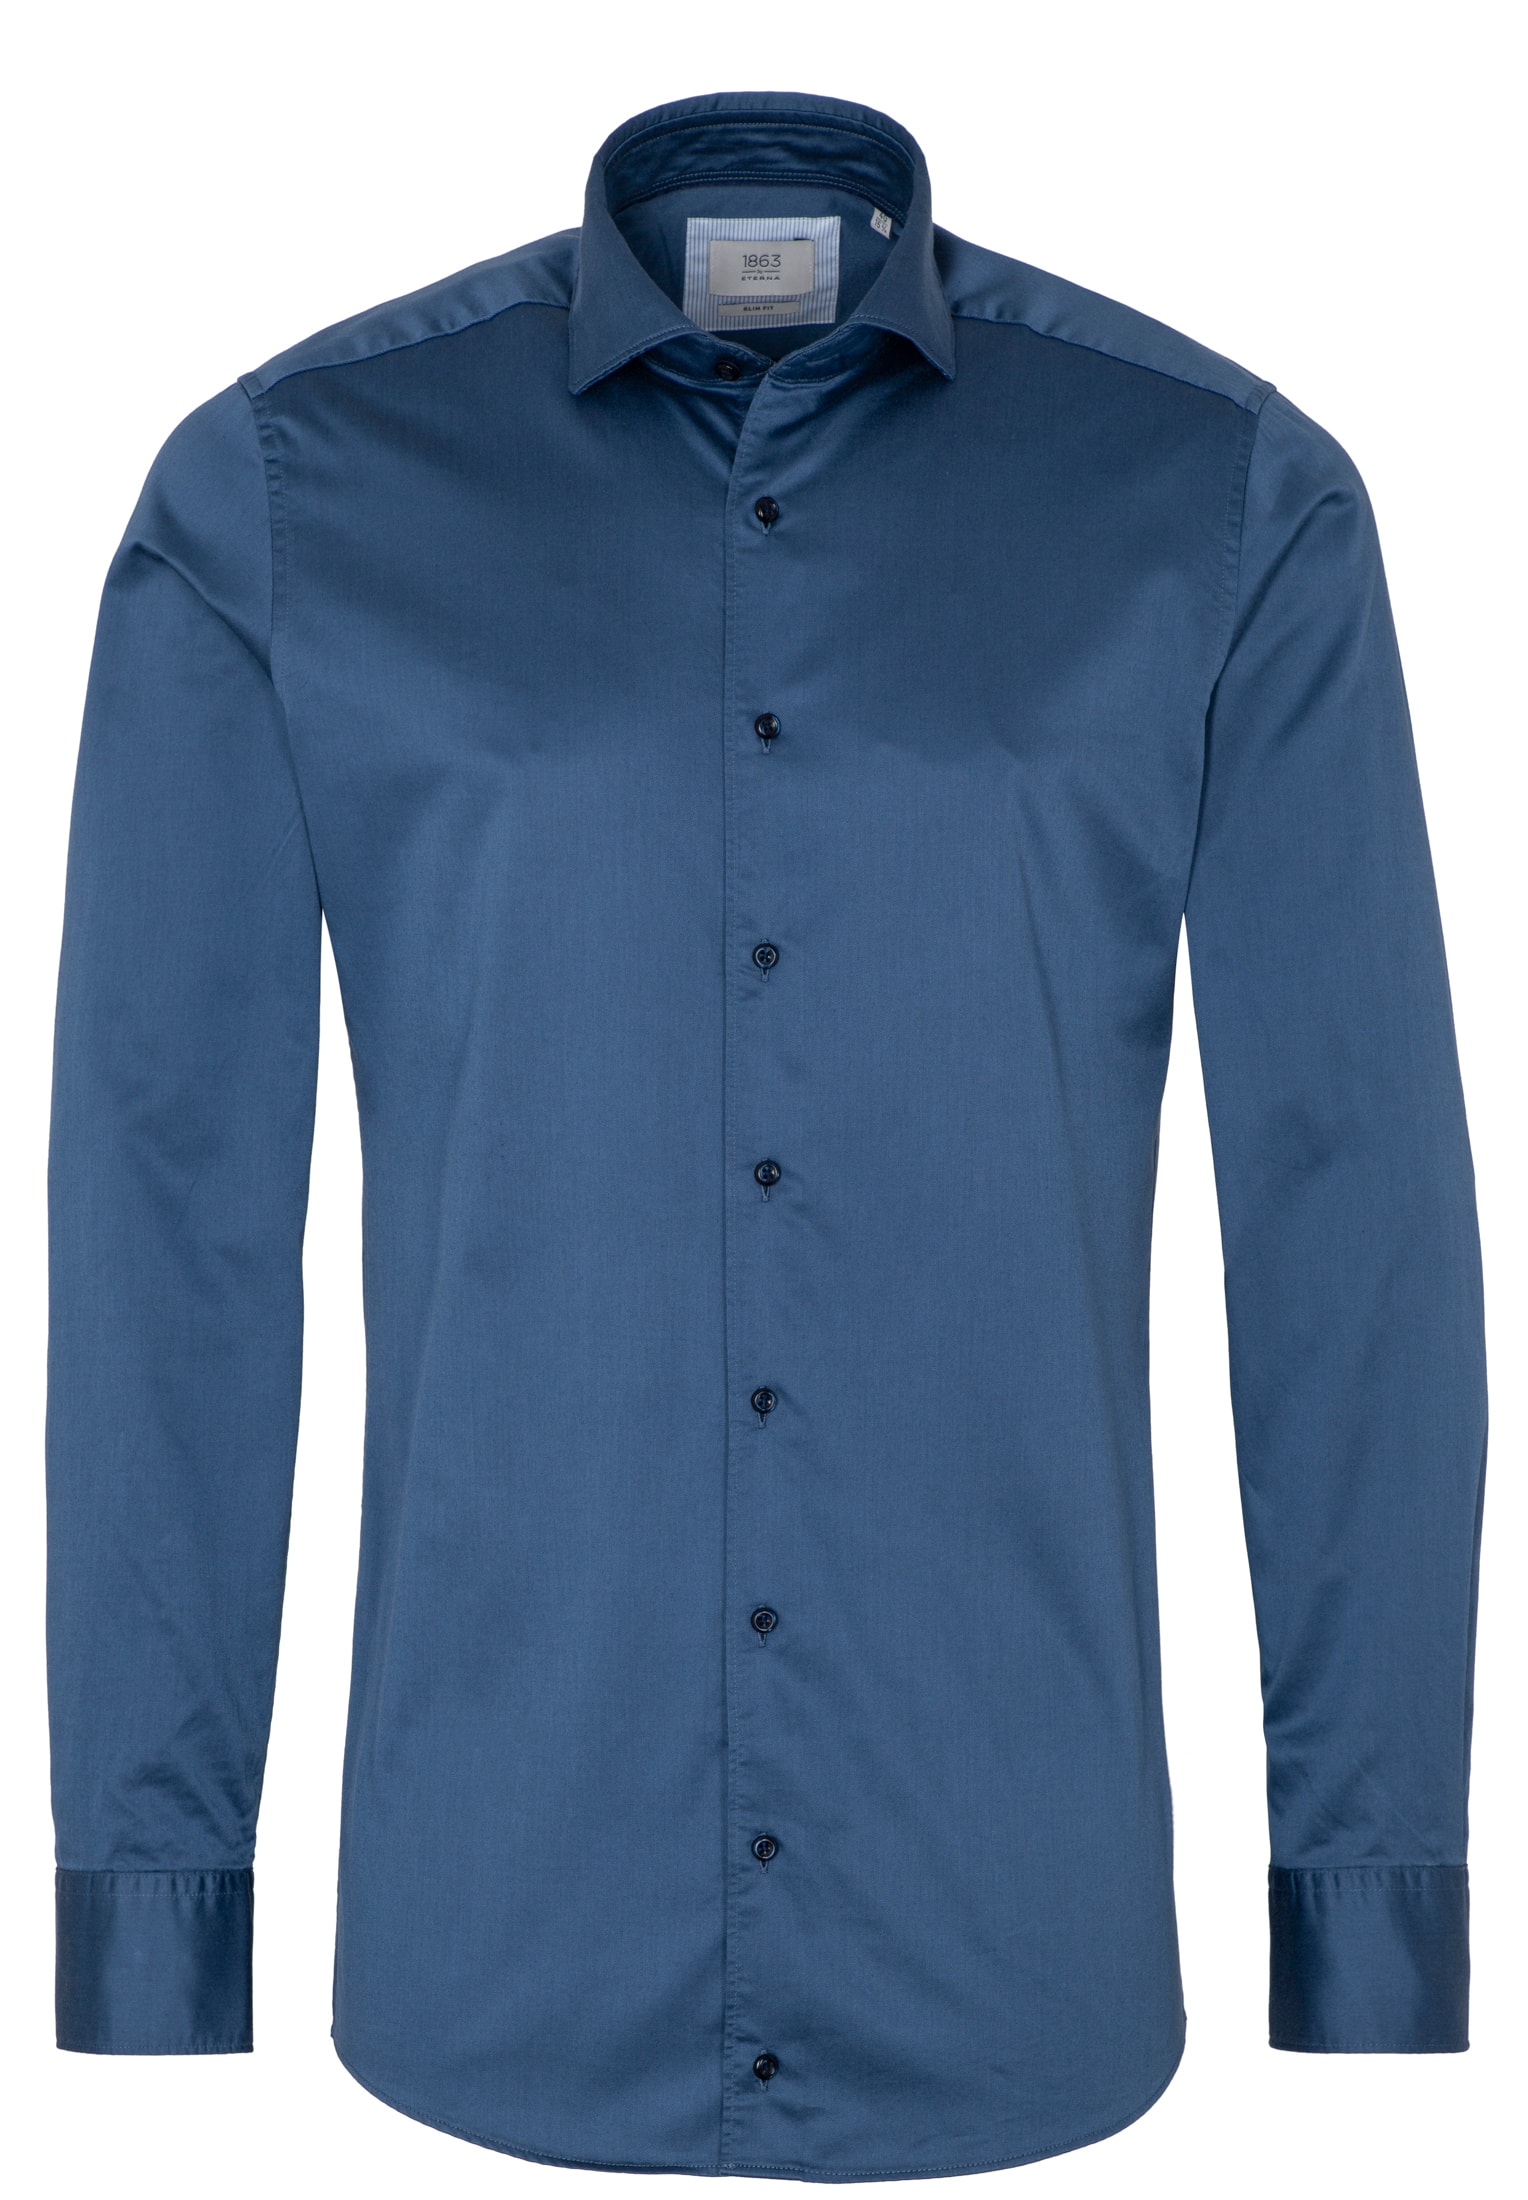 SLIM FIT Soft Luxury Shirt in blue-gray plain